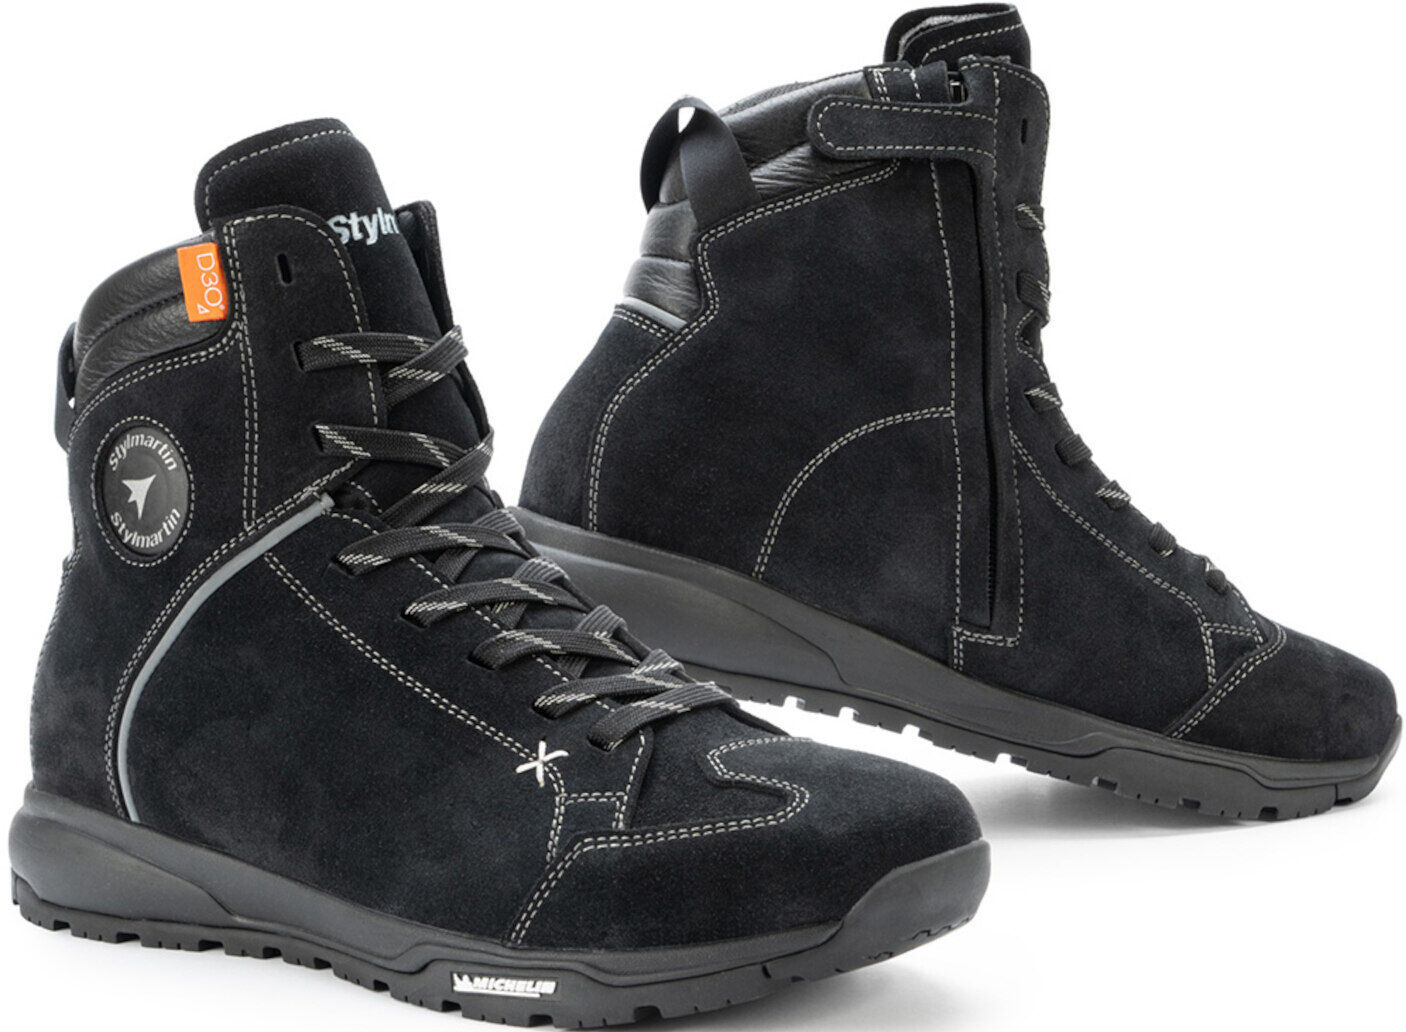 Stylmartin Zed Zapatos de moto impermeables - Negro (44)